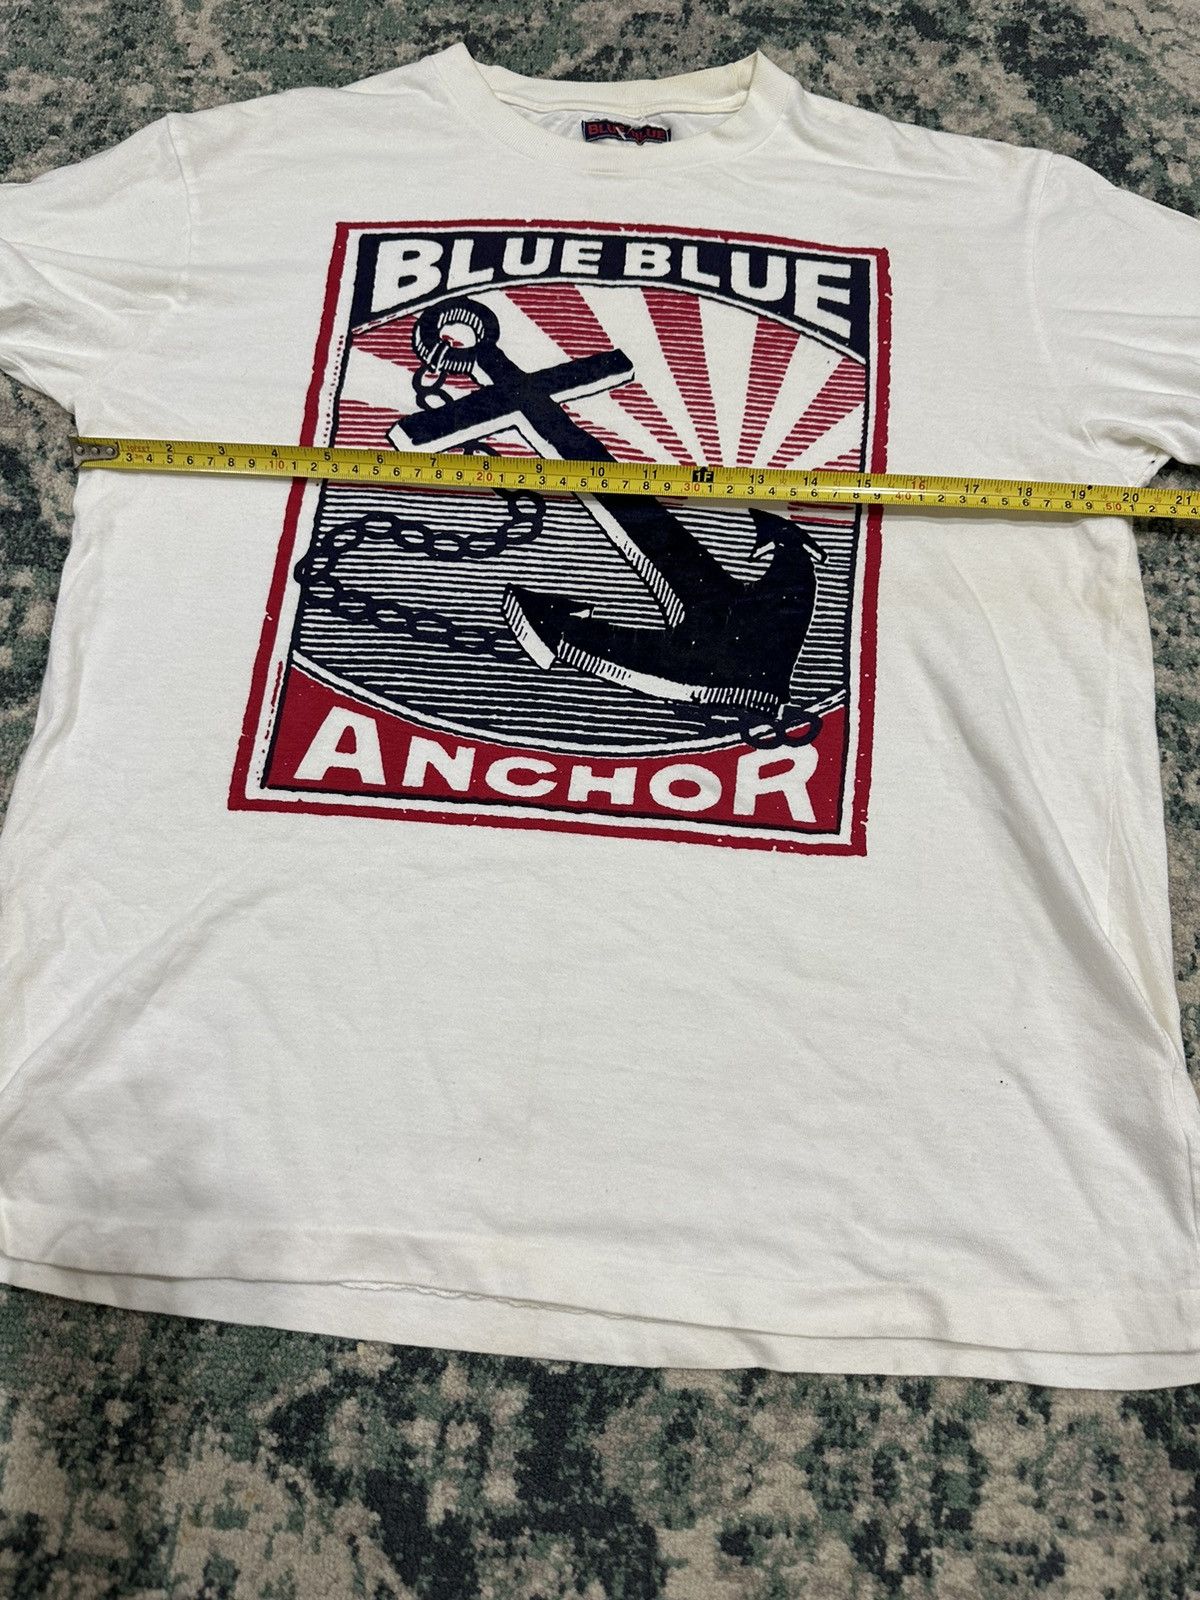 BLUE BLUE Japan Anchor Tshirt Medium - 10